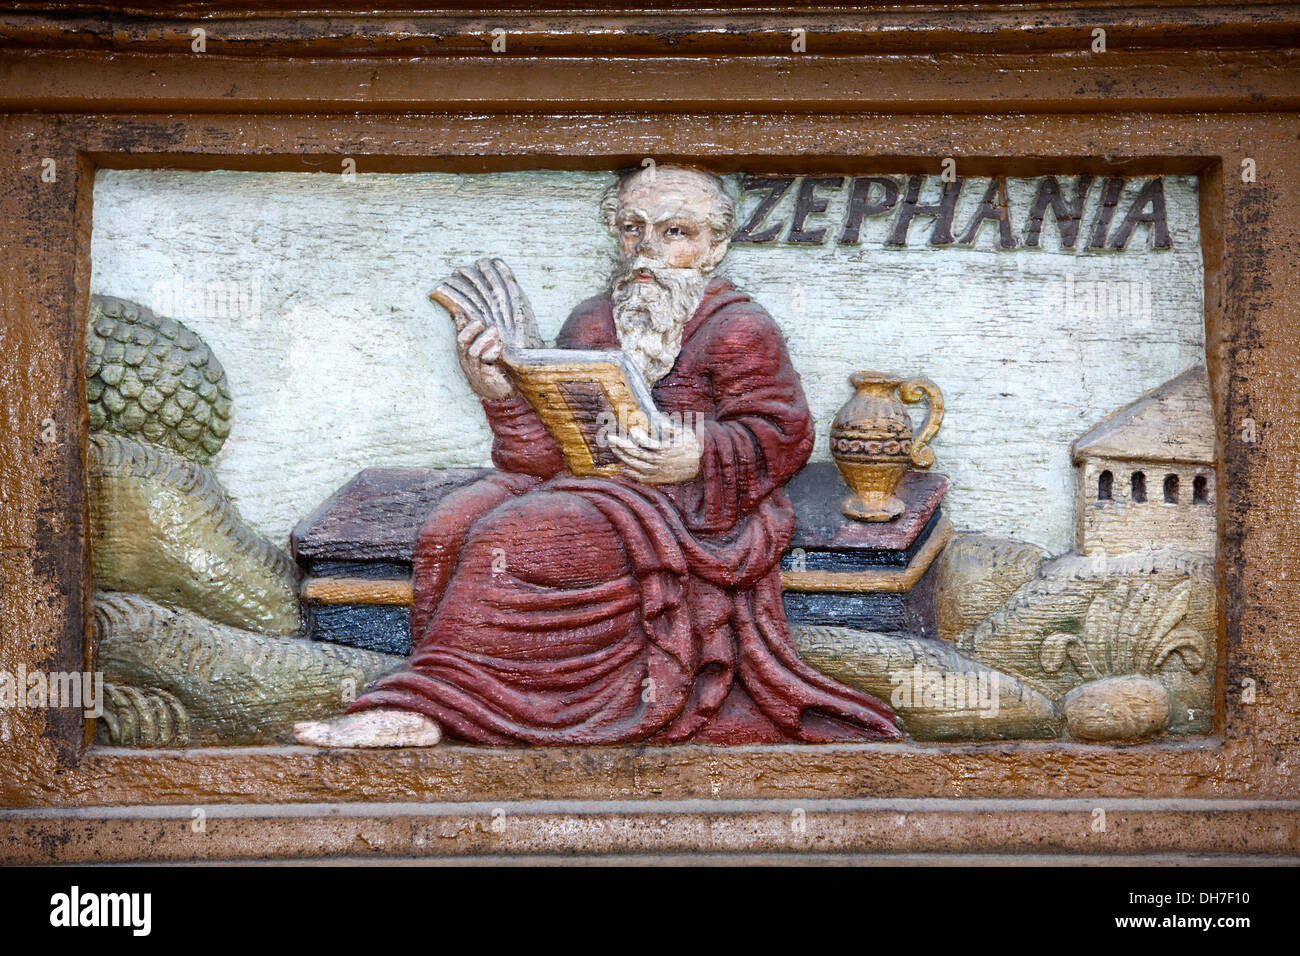 Zephaniah, Old Latin School, wood carvings, Alfeld, Germany Stock Photo